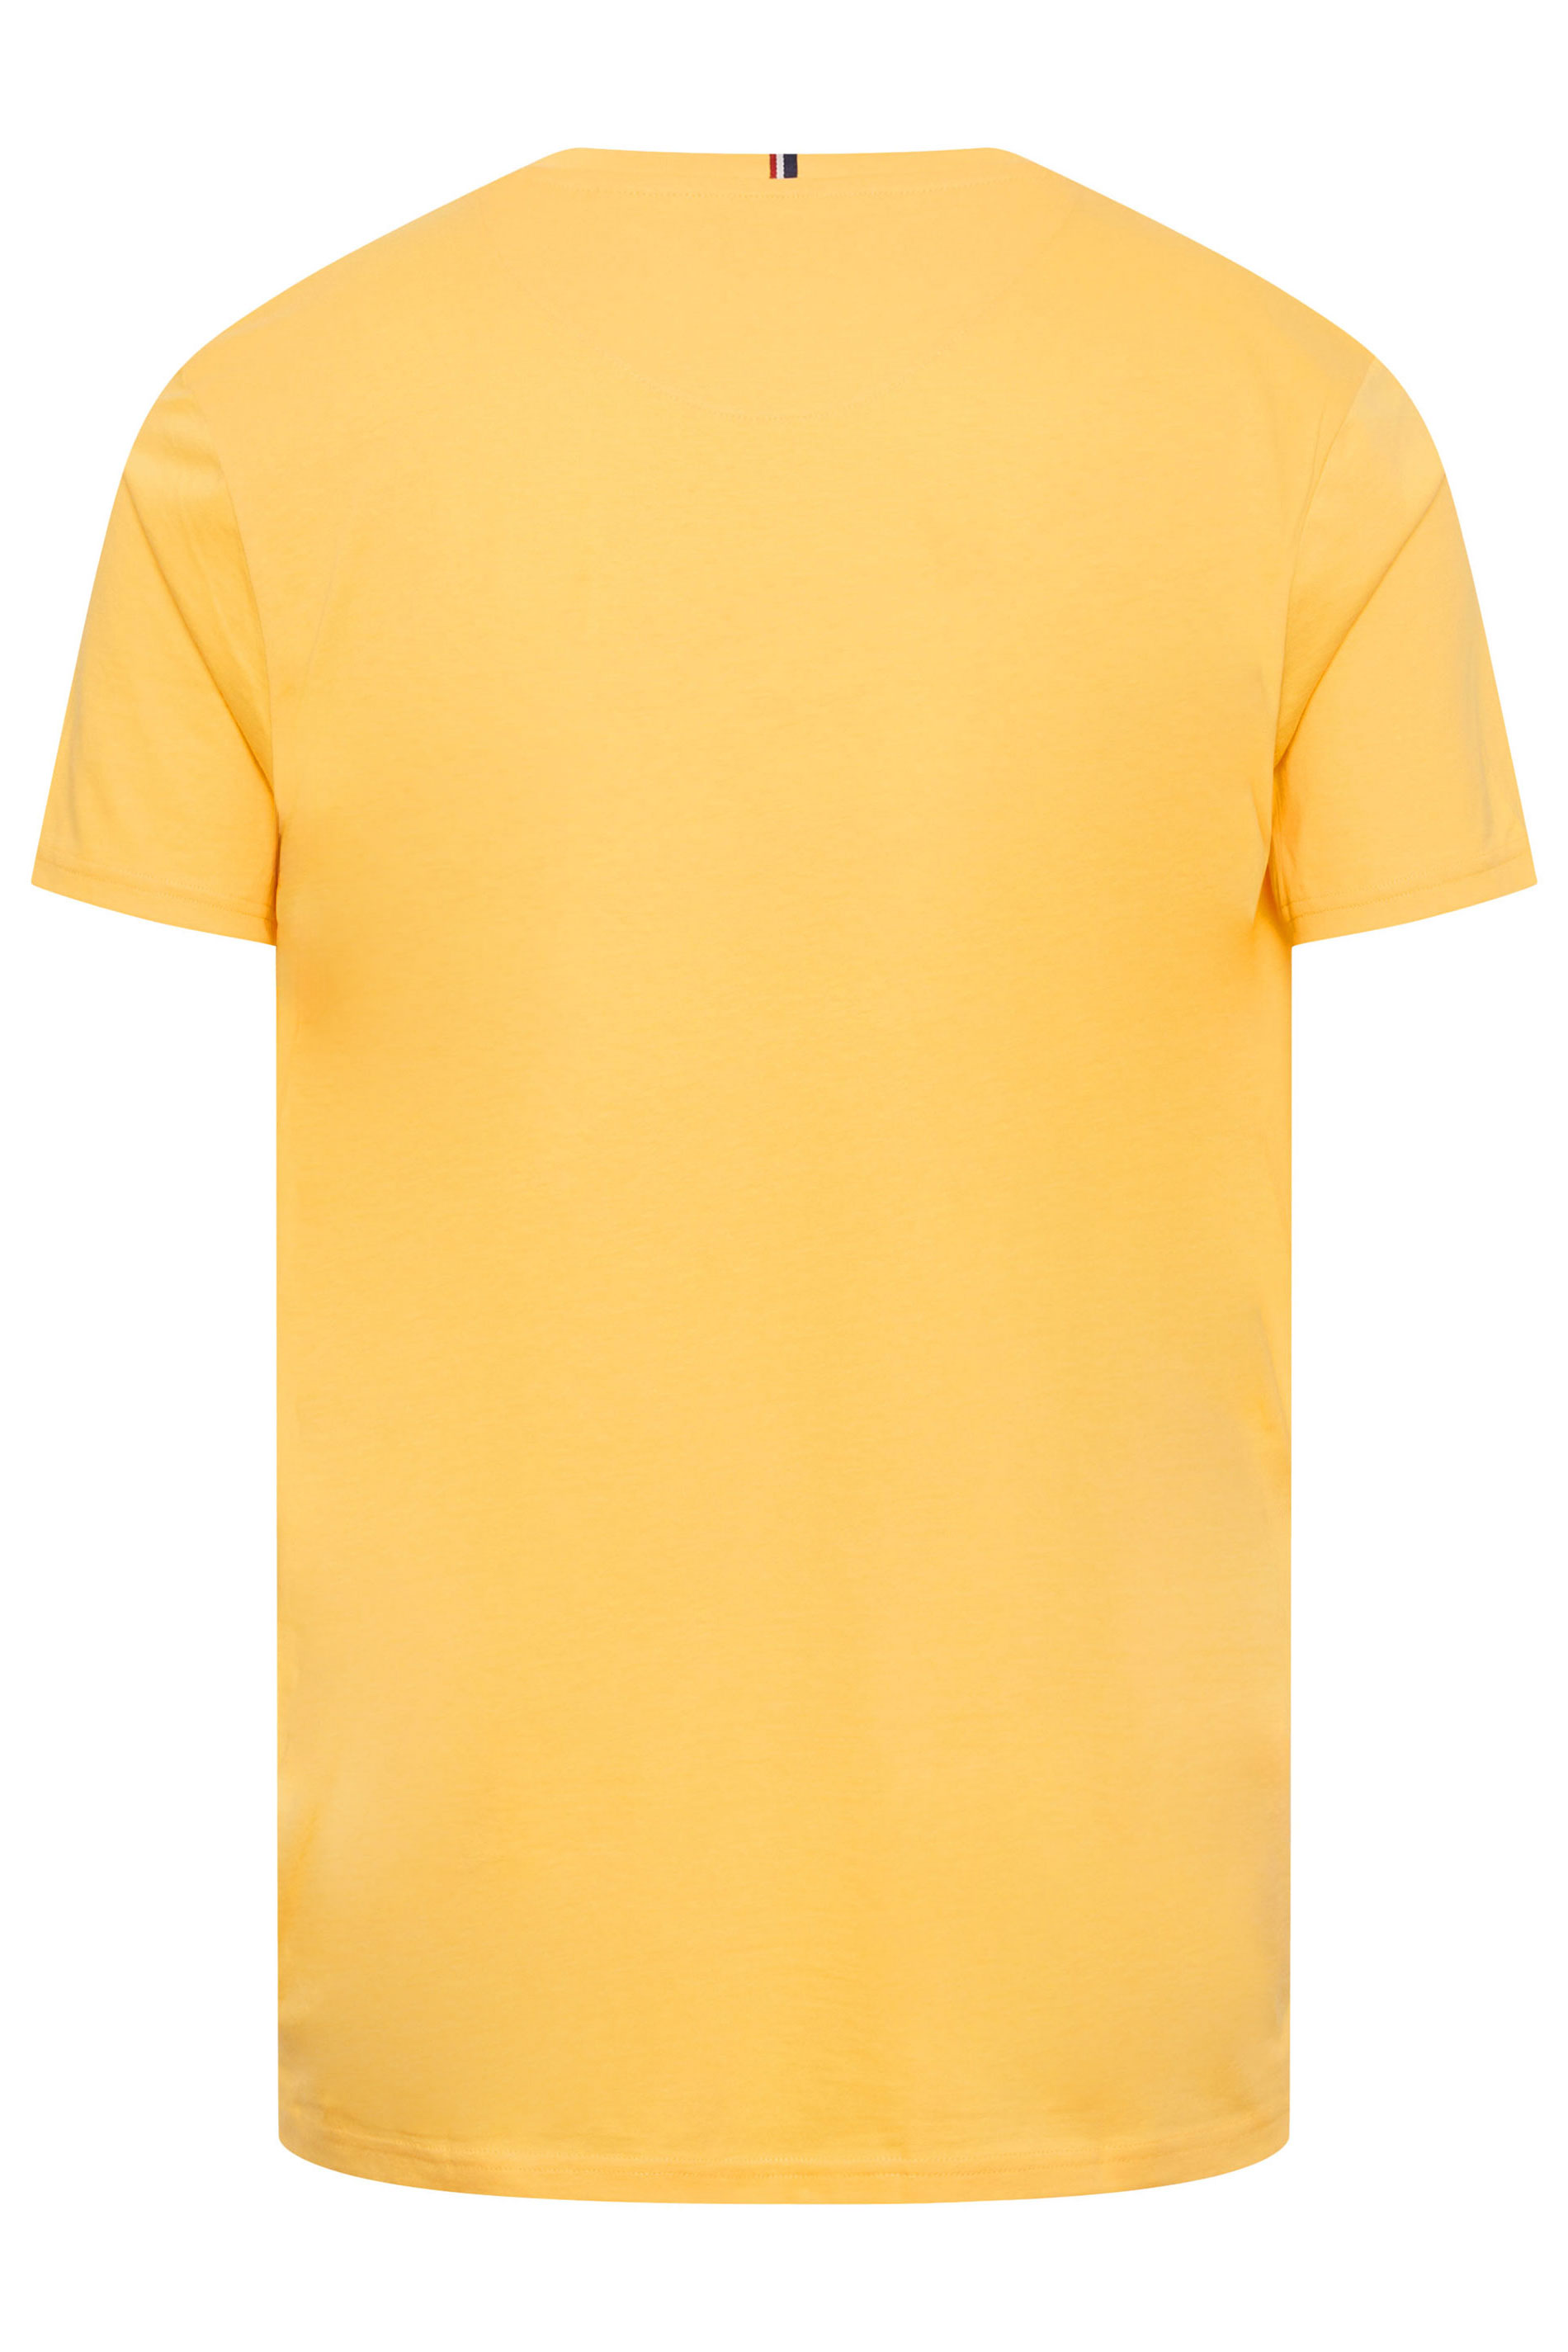 U.S. POLO ASSN. Big & Tall Yellow Short Sleeve T-Shirt | BadRhino 3